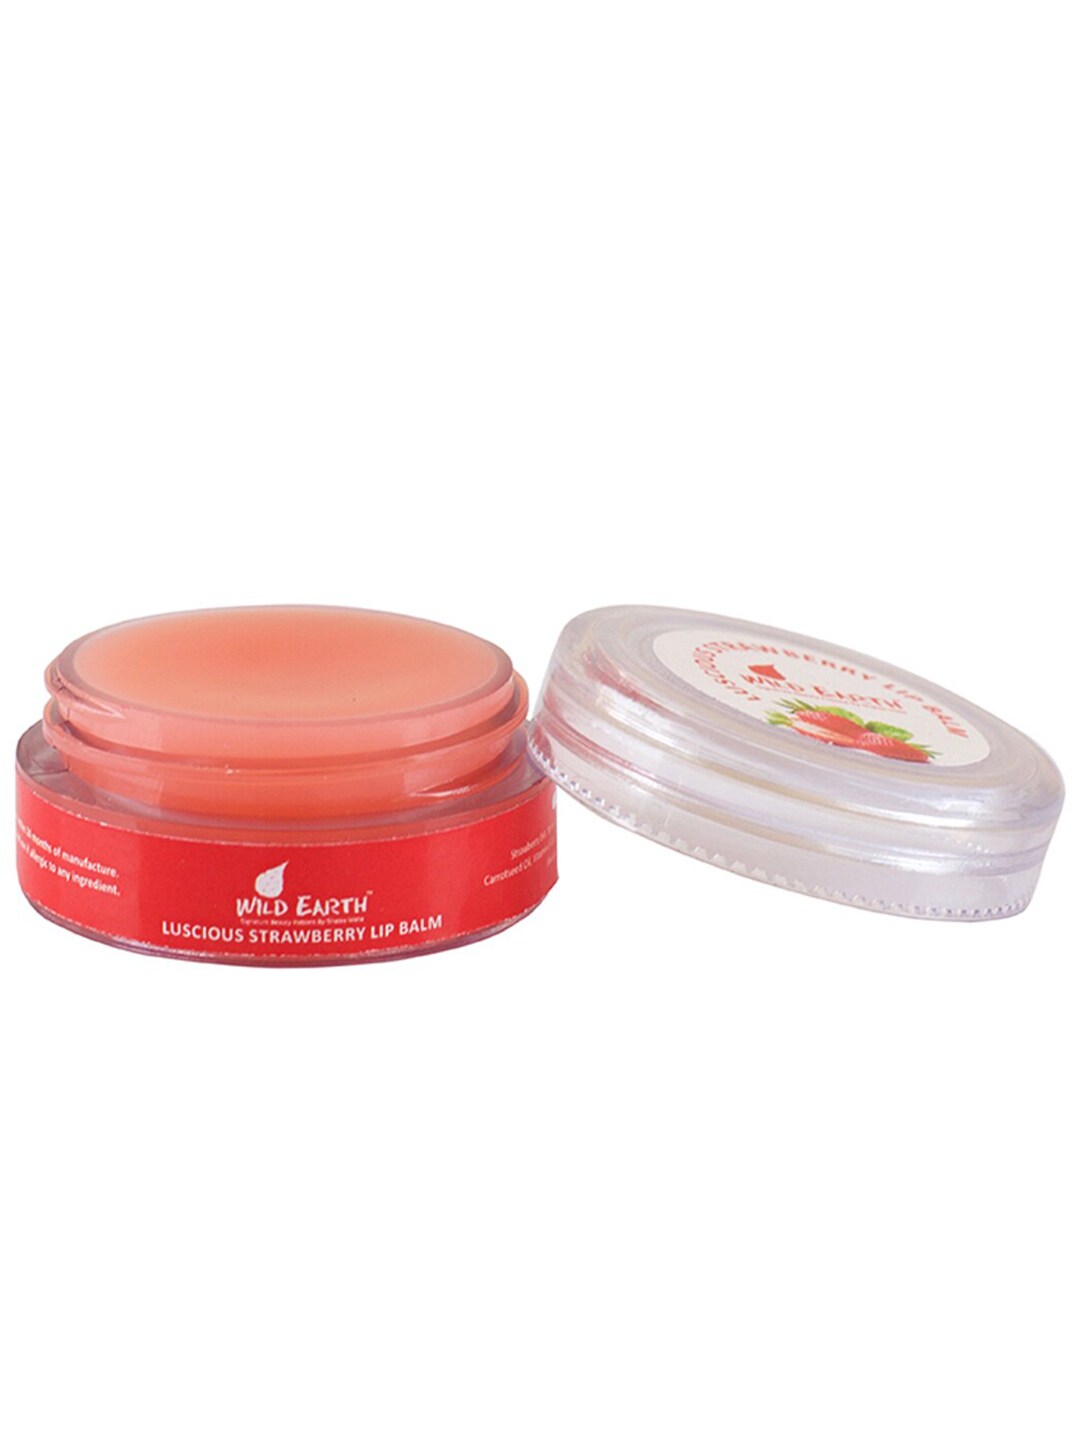 Wild Earth Luscious Strawberry Heal Lip Balm - 9 g Price in India